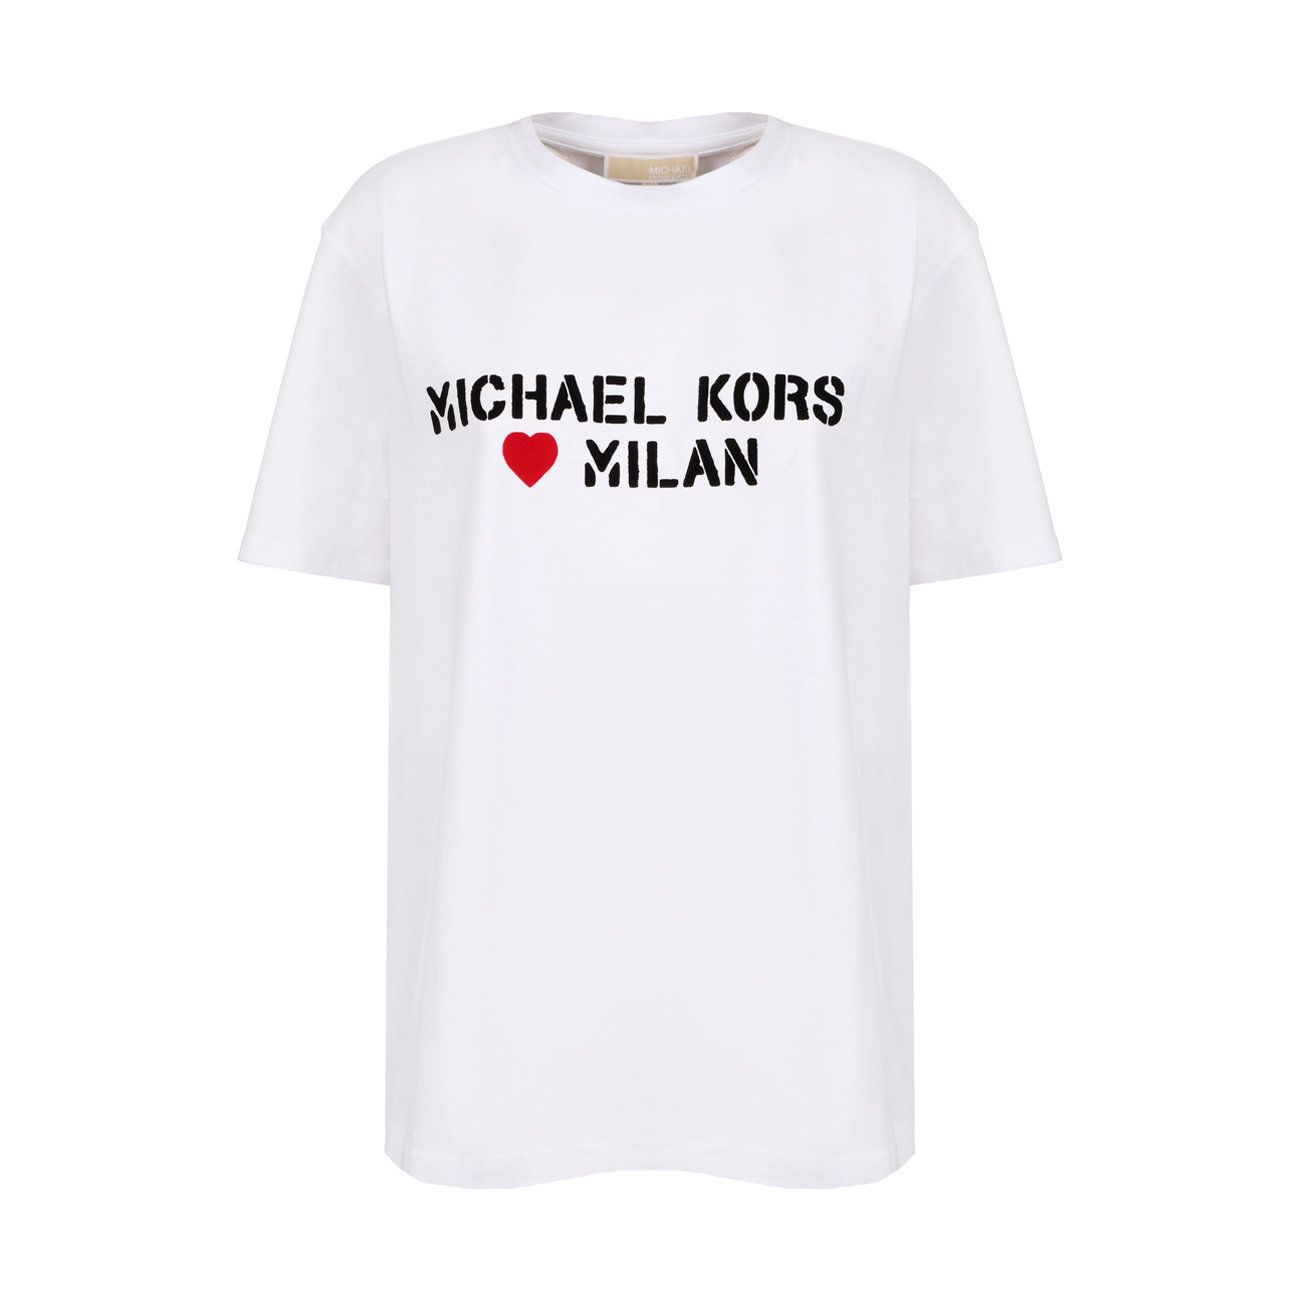 michael kors short sleeve shirts